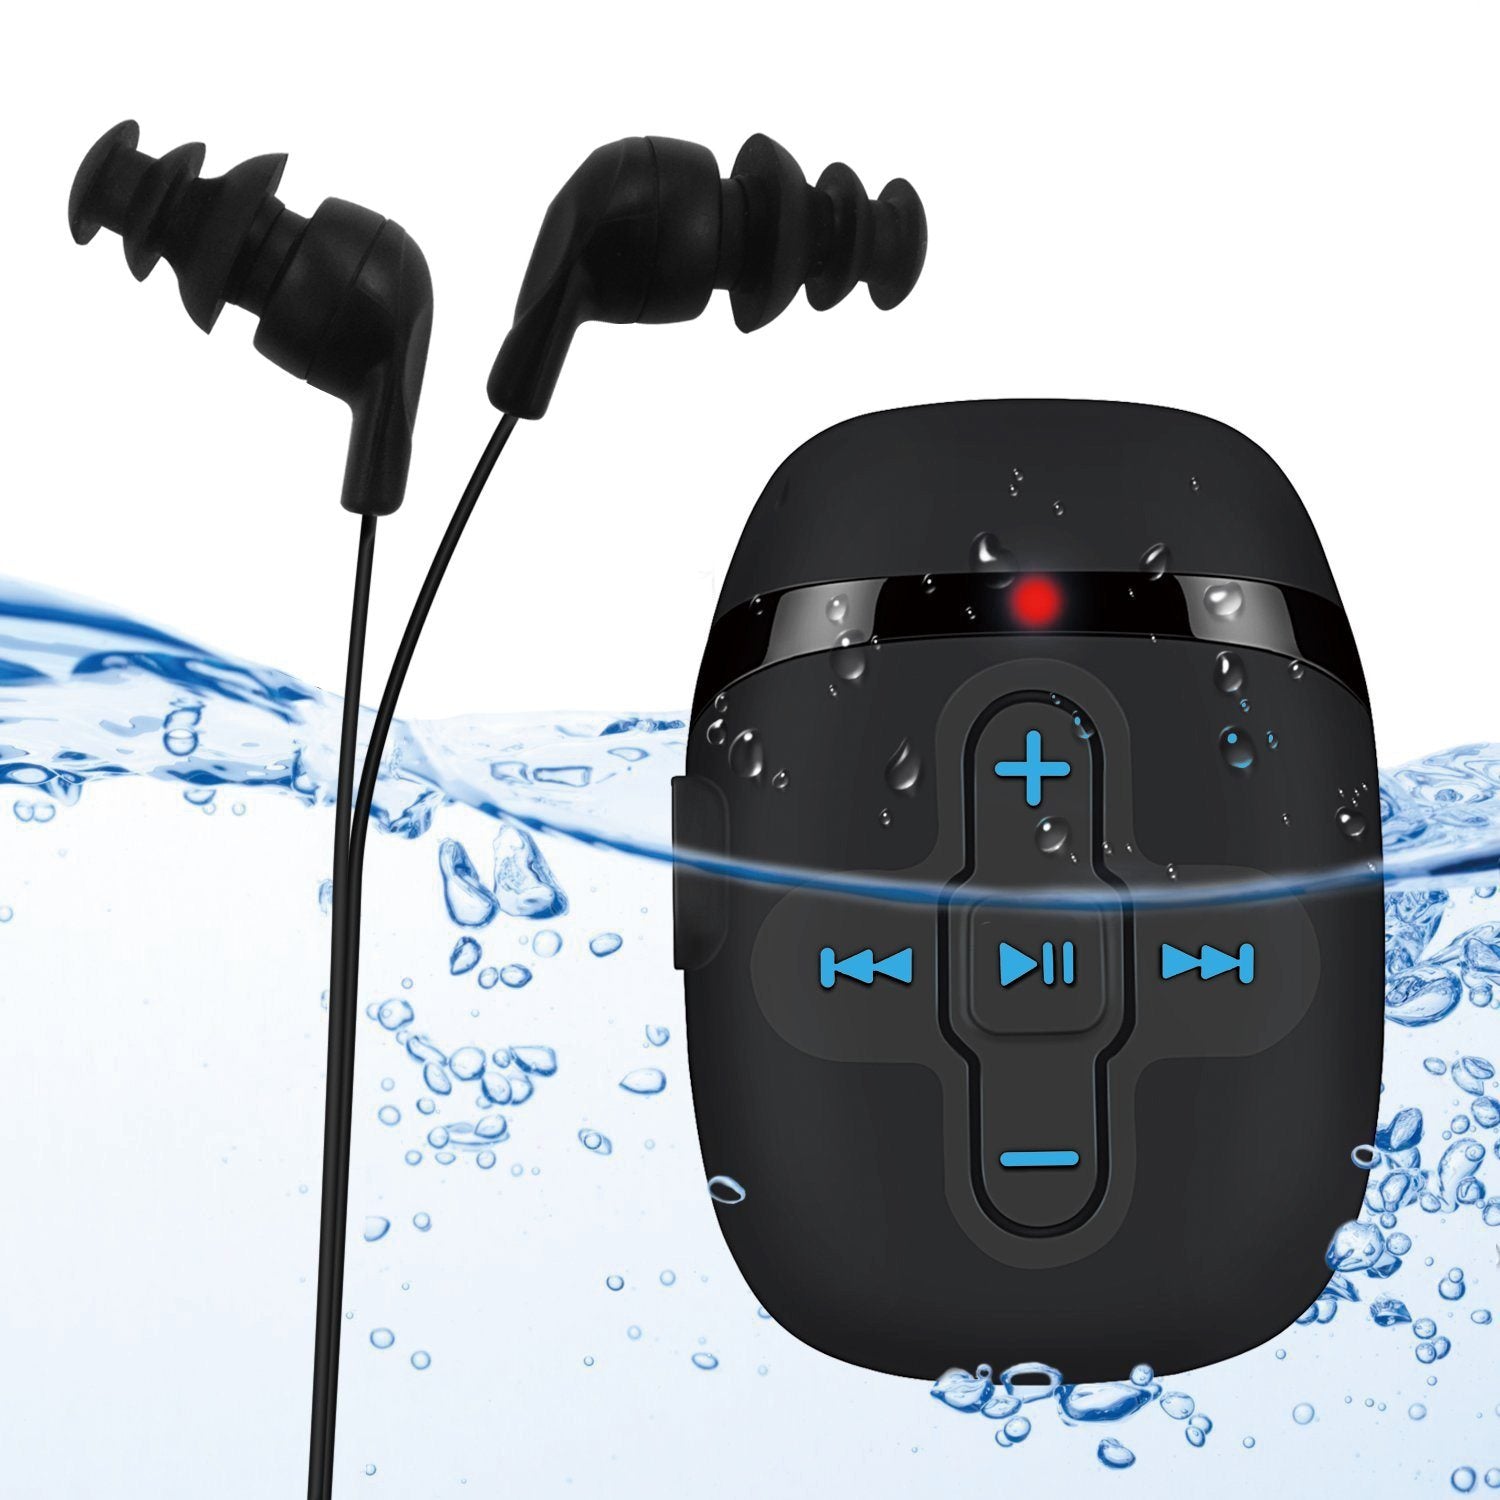 Waterproof music player for swimming, 8GB swimming Audio player